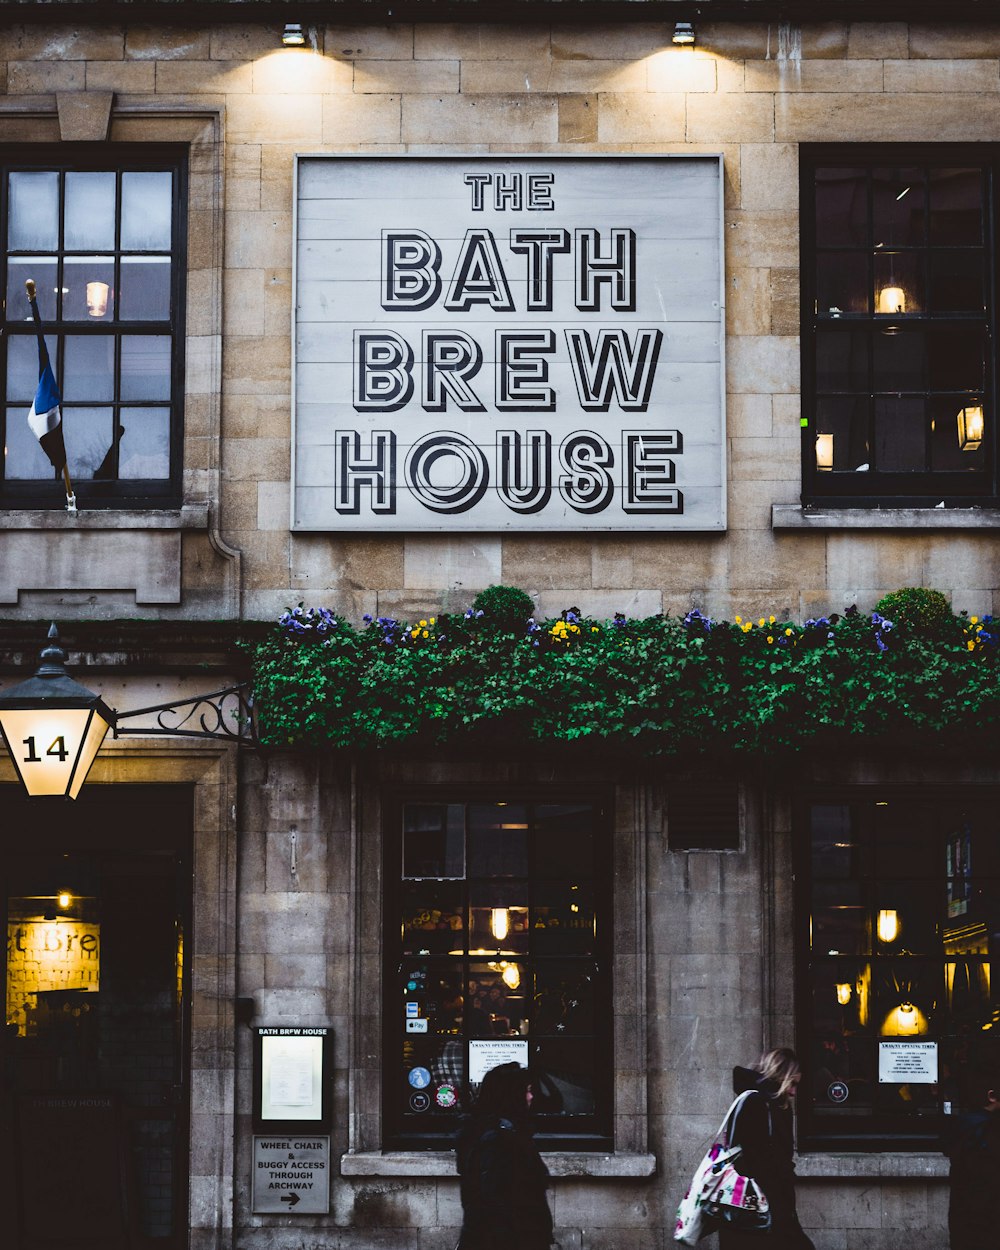 The Bath Brew House signage